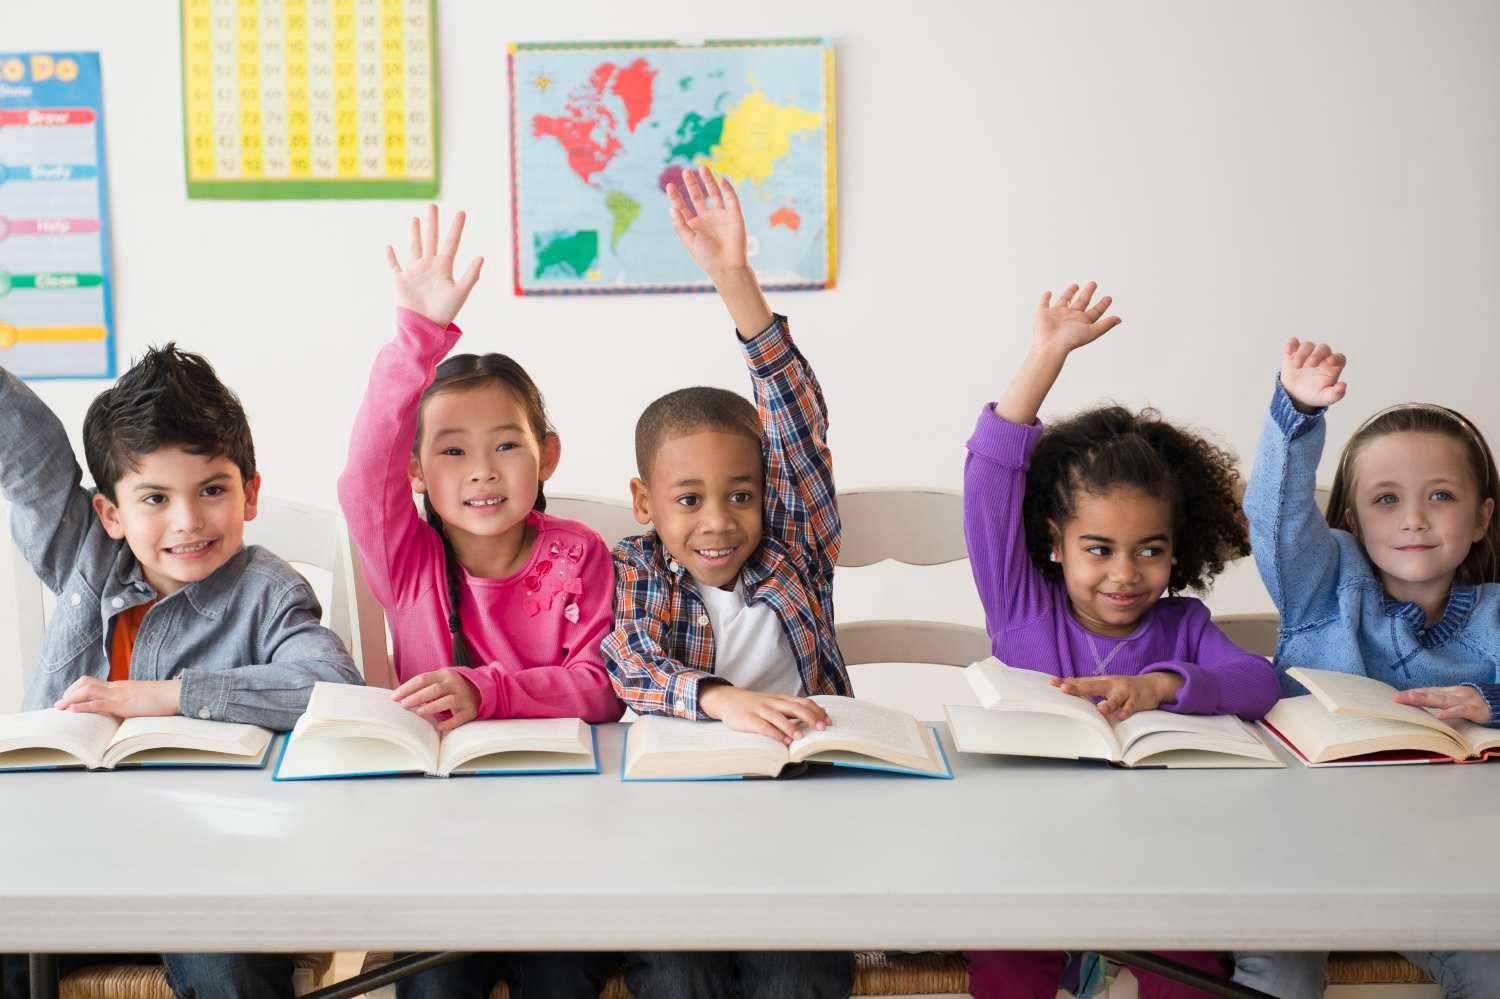 Five preschool children with books raising their hands